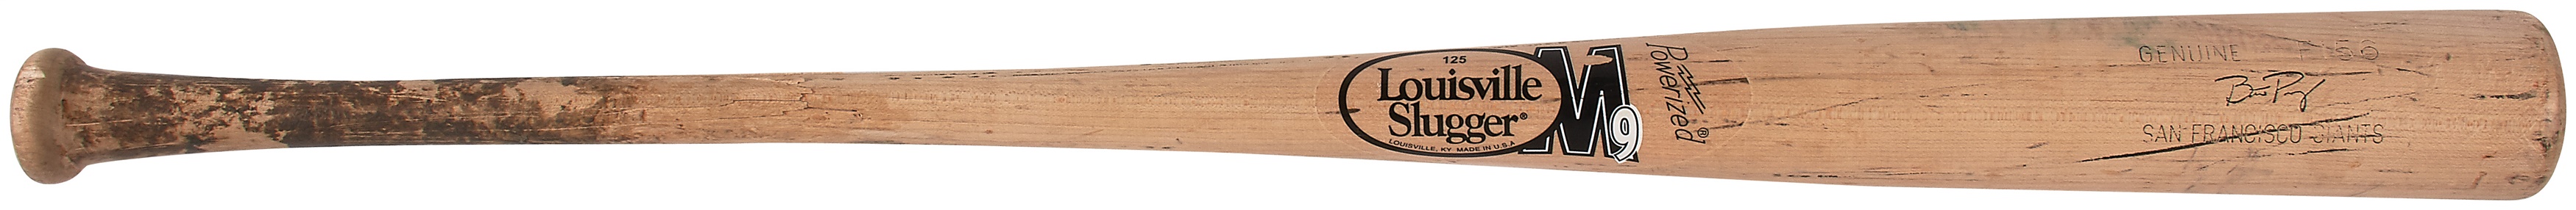 Baseball Equipment - 2010 Buster Posey Game Used Louisville Slugger Rookie Bat